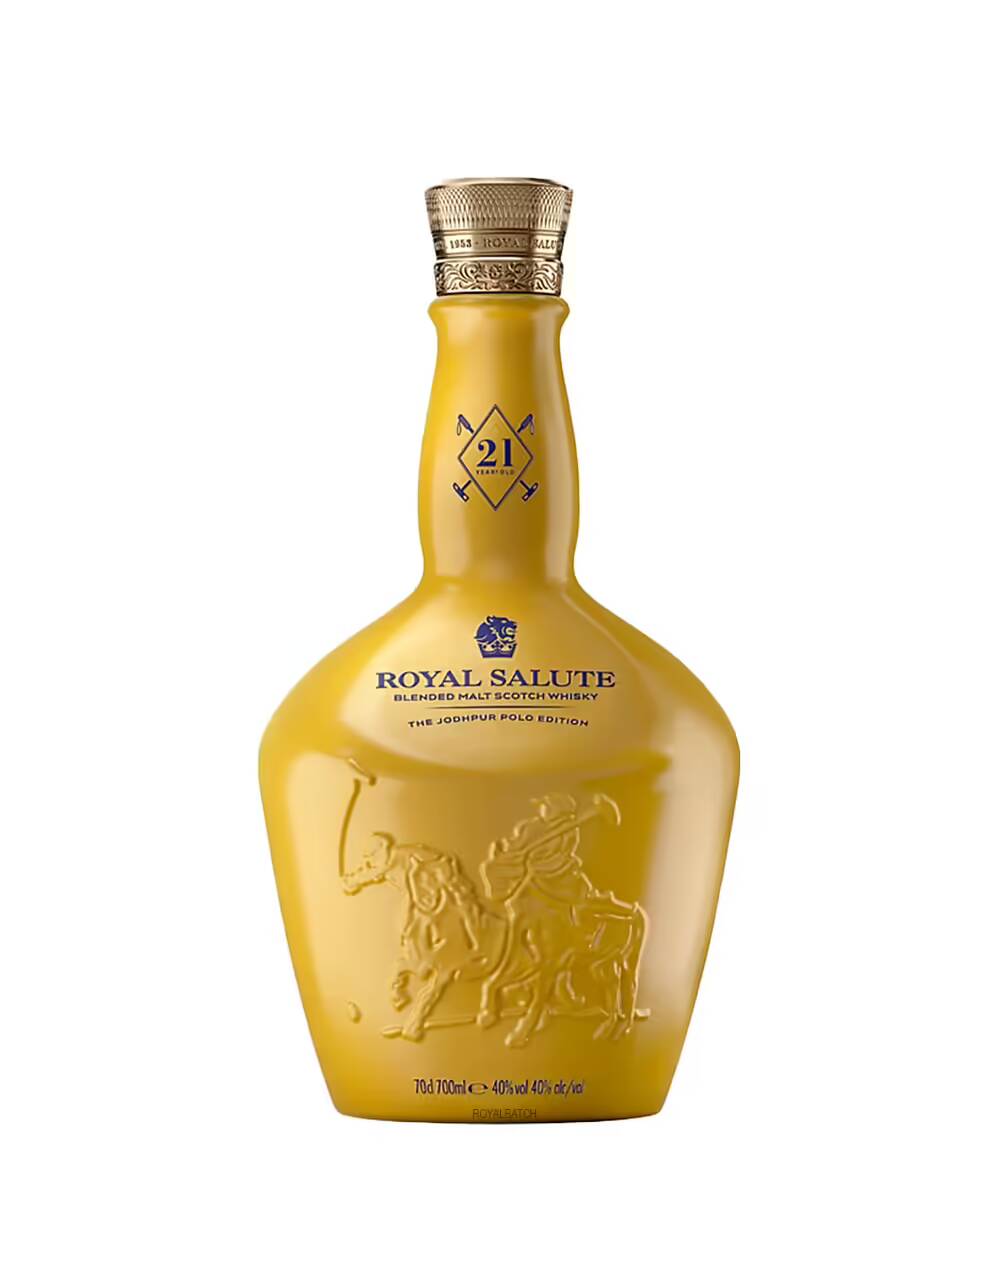 Royal Salute 21 Year The Jodhpur Polo Edition Blended Malt Scotch Whisky